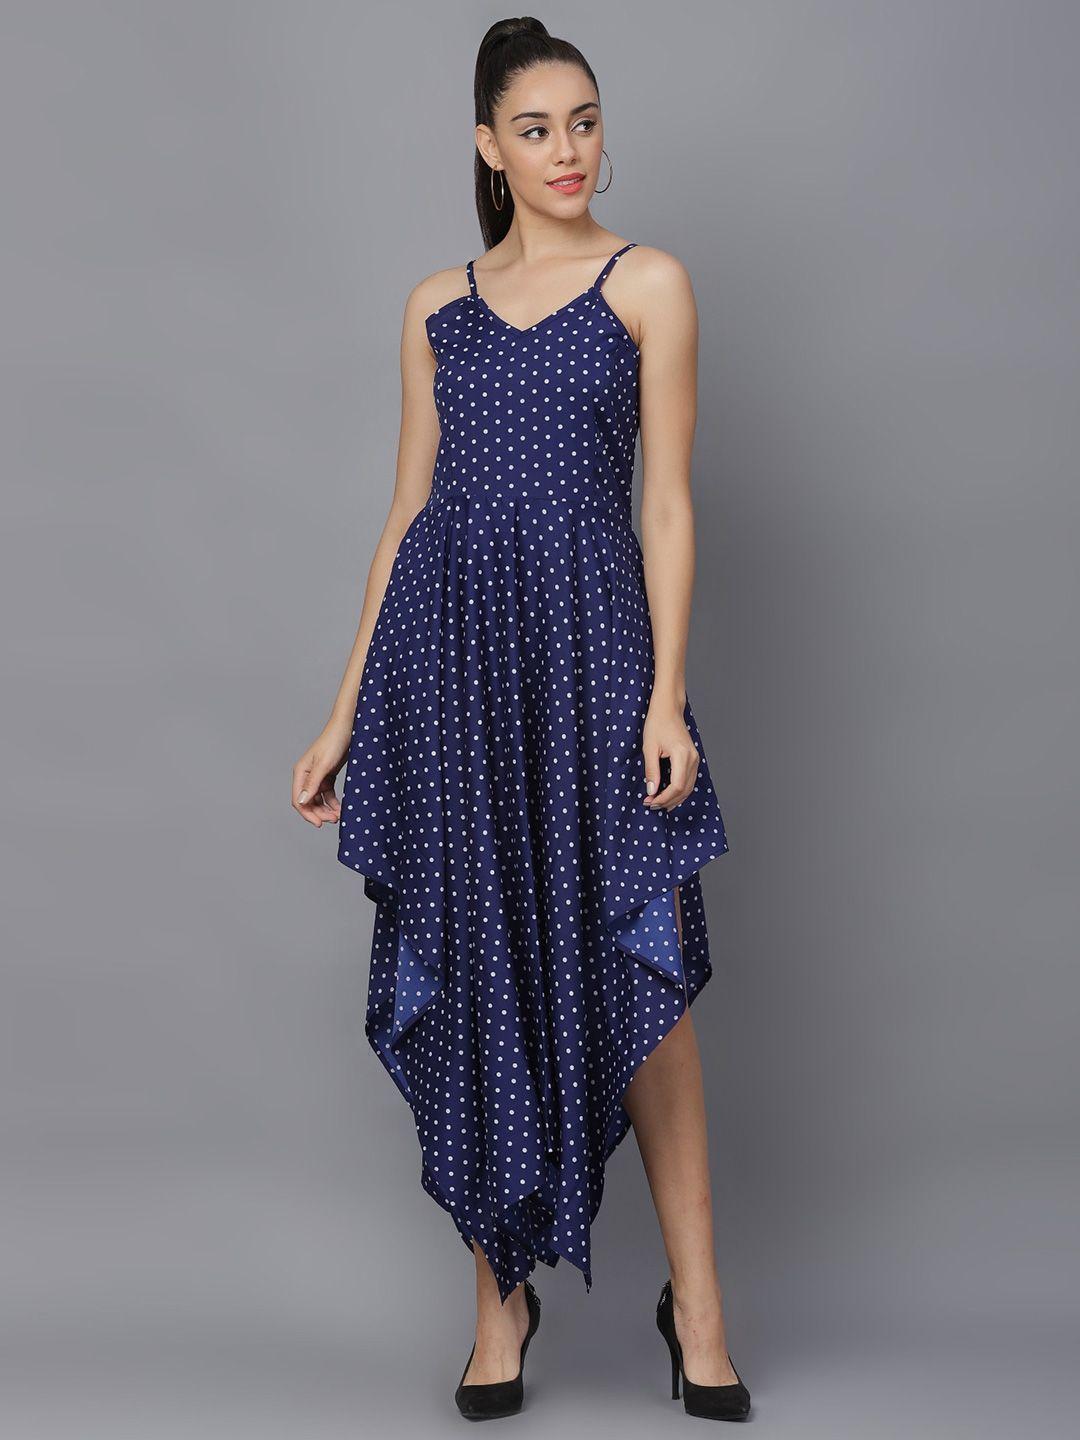 baesd polka dot printed maxi fit & flare dress